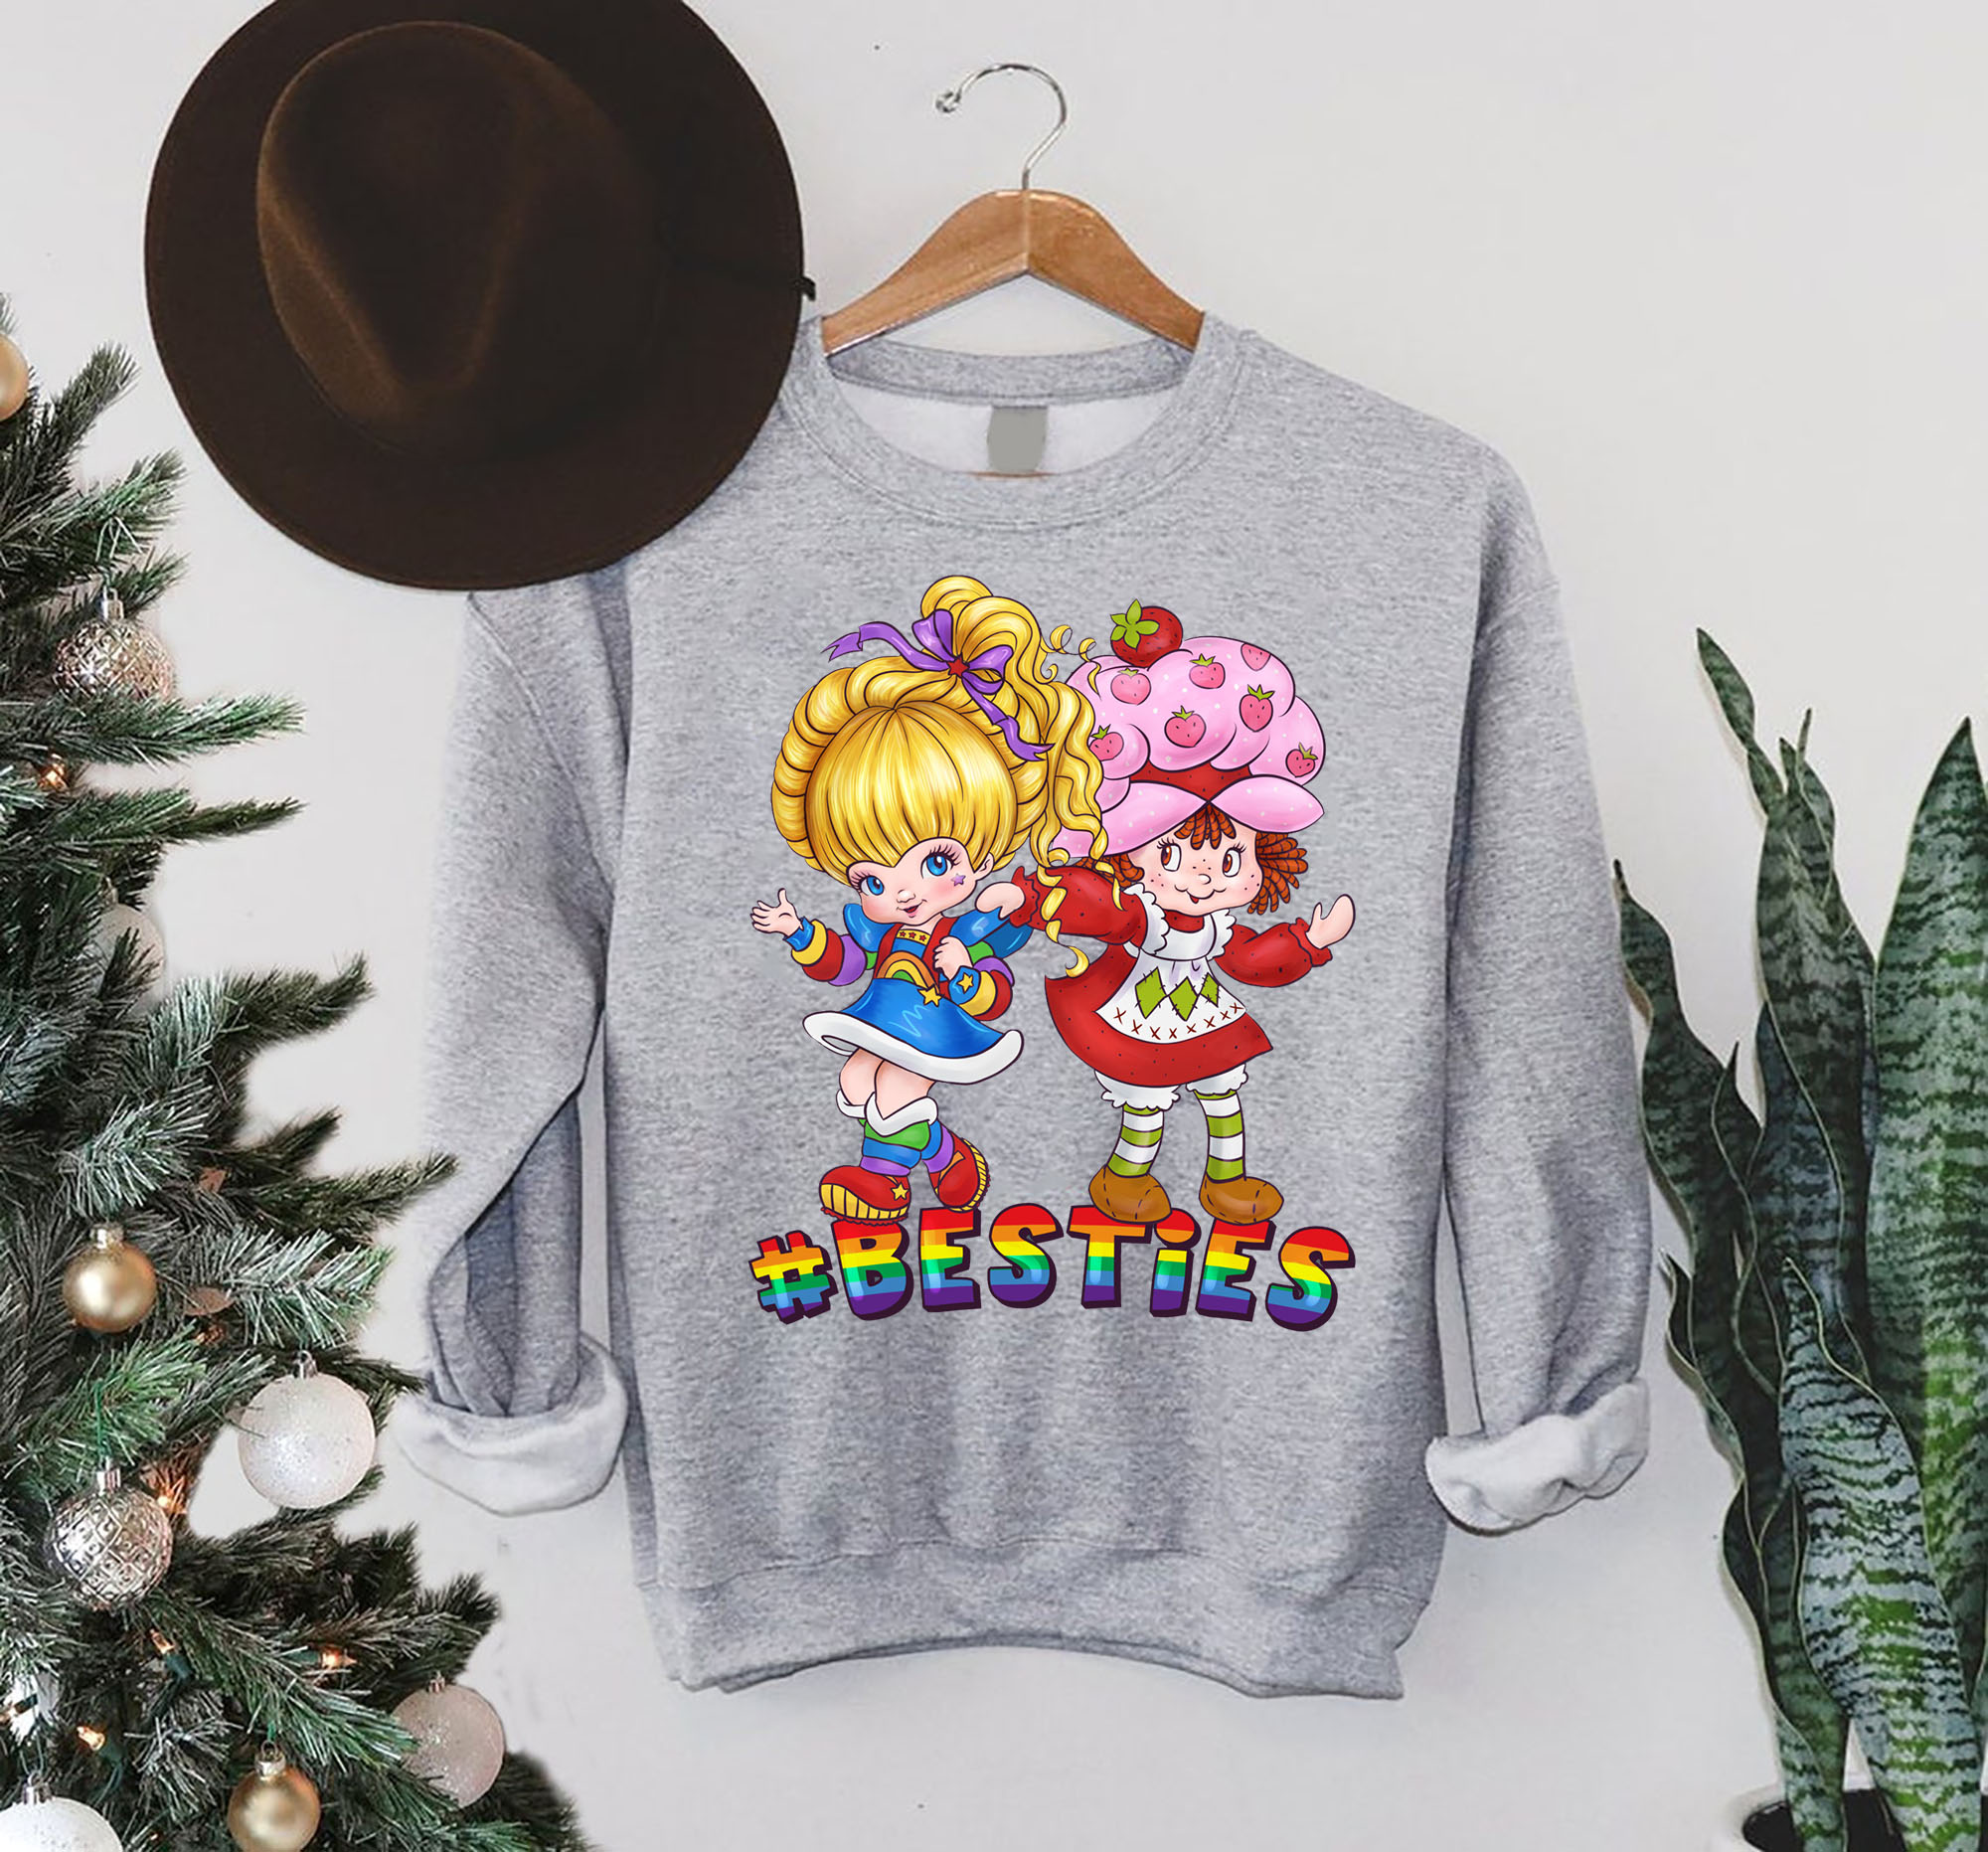 Rainbow Brite And Strawberry Shortcake Sweatshirt, Rainbow Brite 80ss Cartoons Shirt, Rainbow Brite Theme